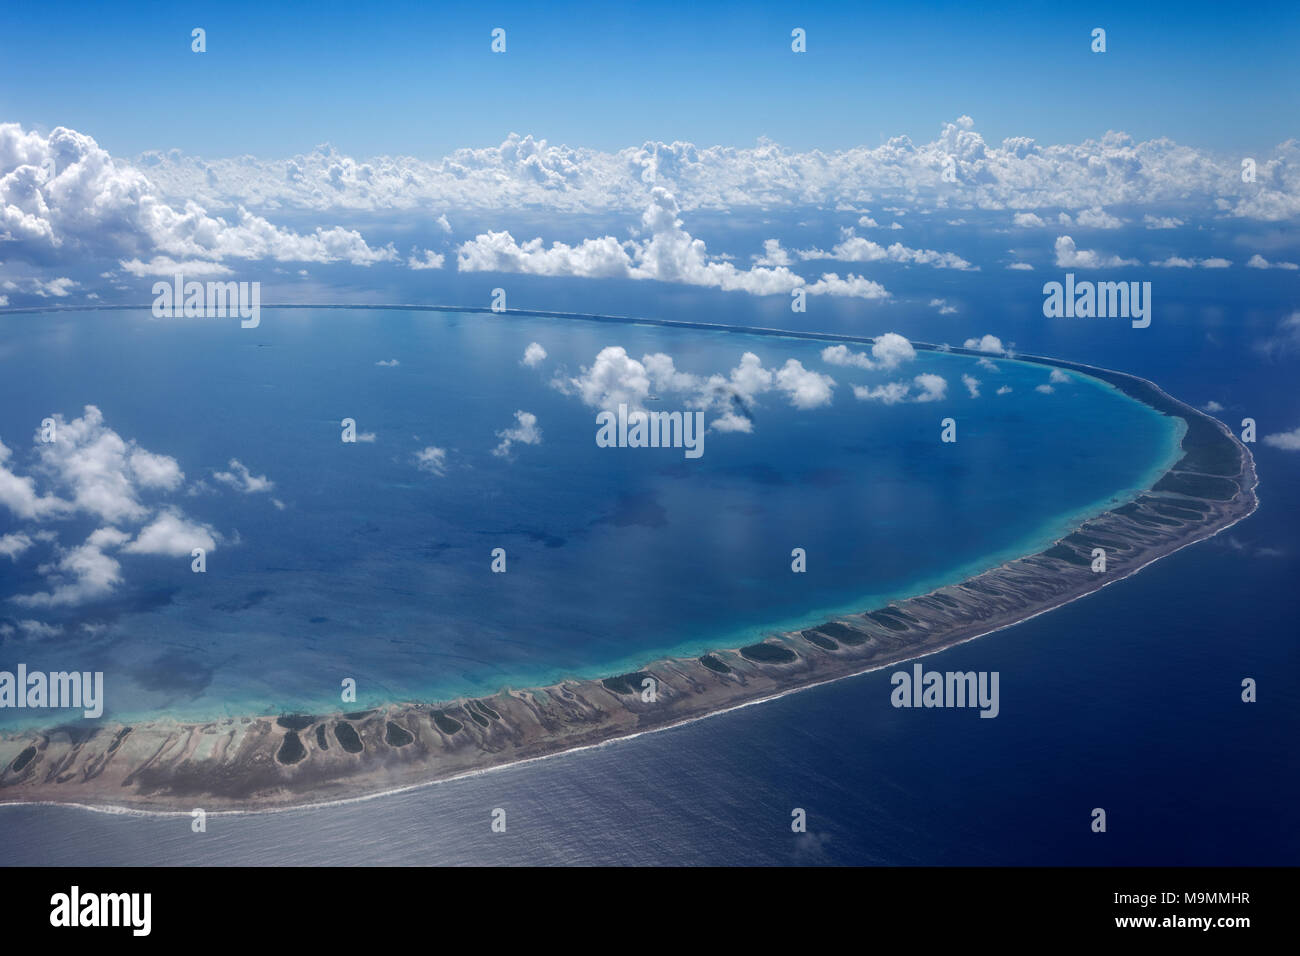 Foto aerea, Ringatoll, Rangiroa, isole della Società, isole Windward, Polinesia Francese Foto Stock